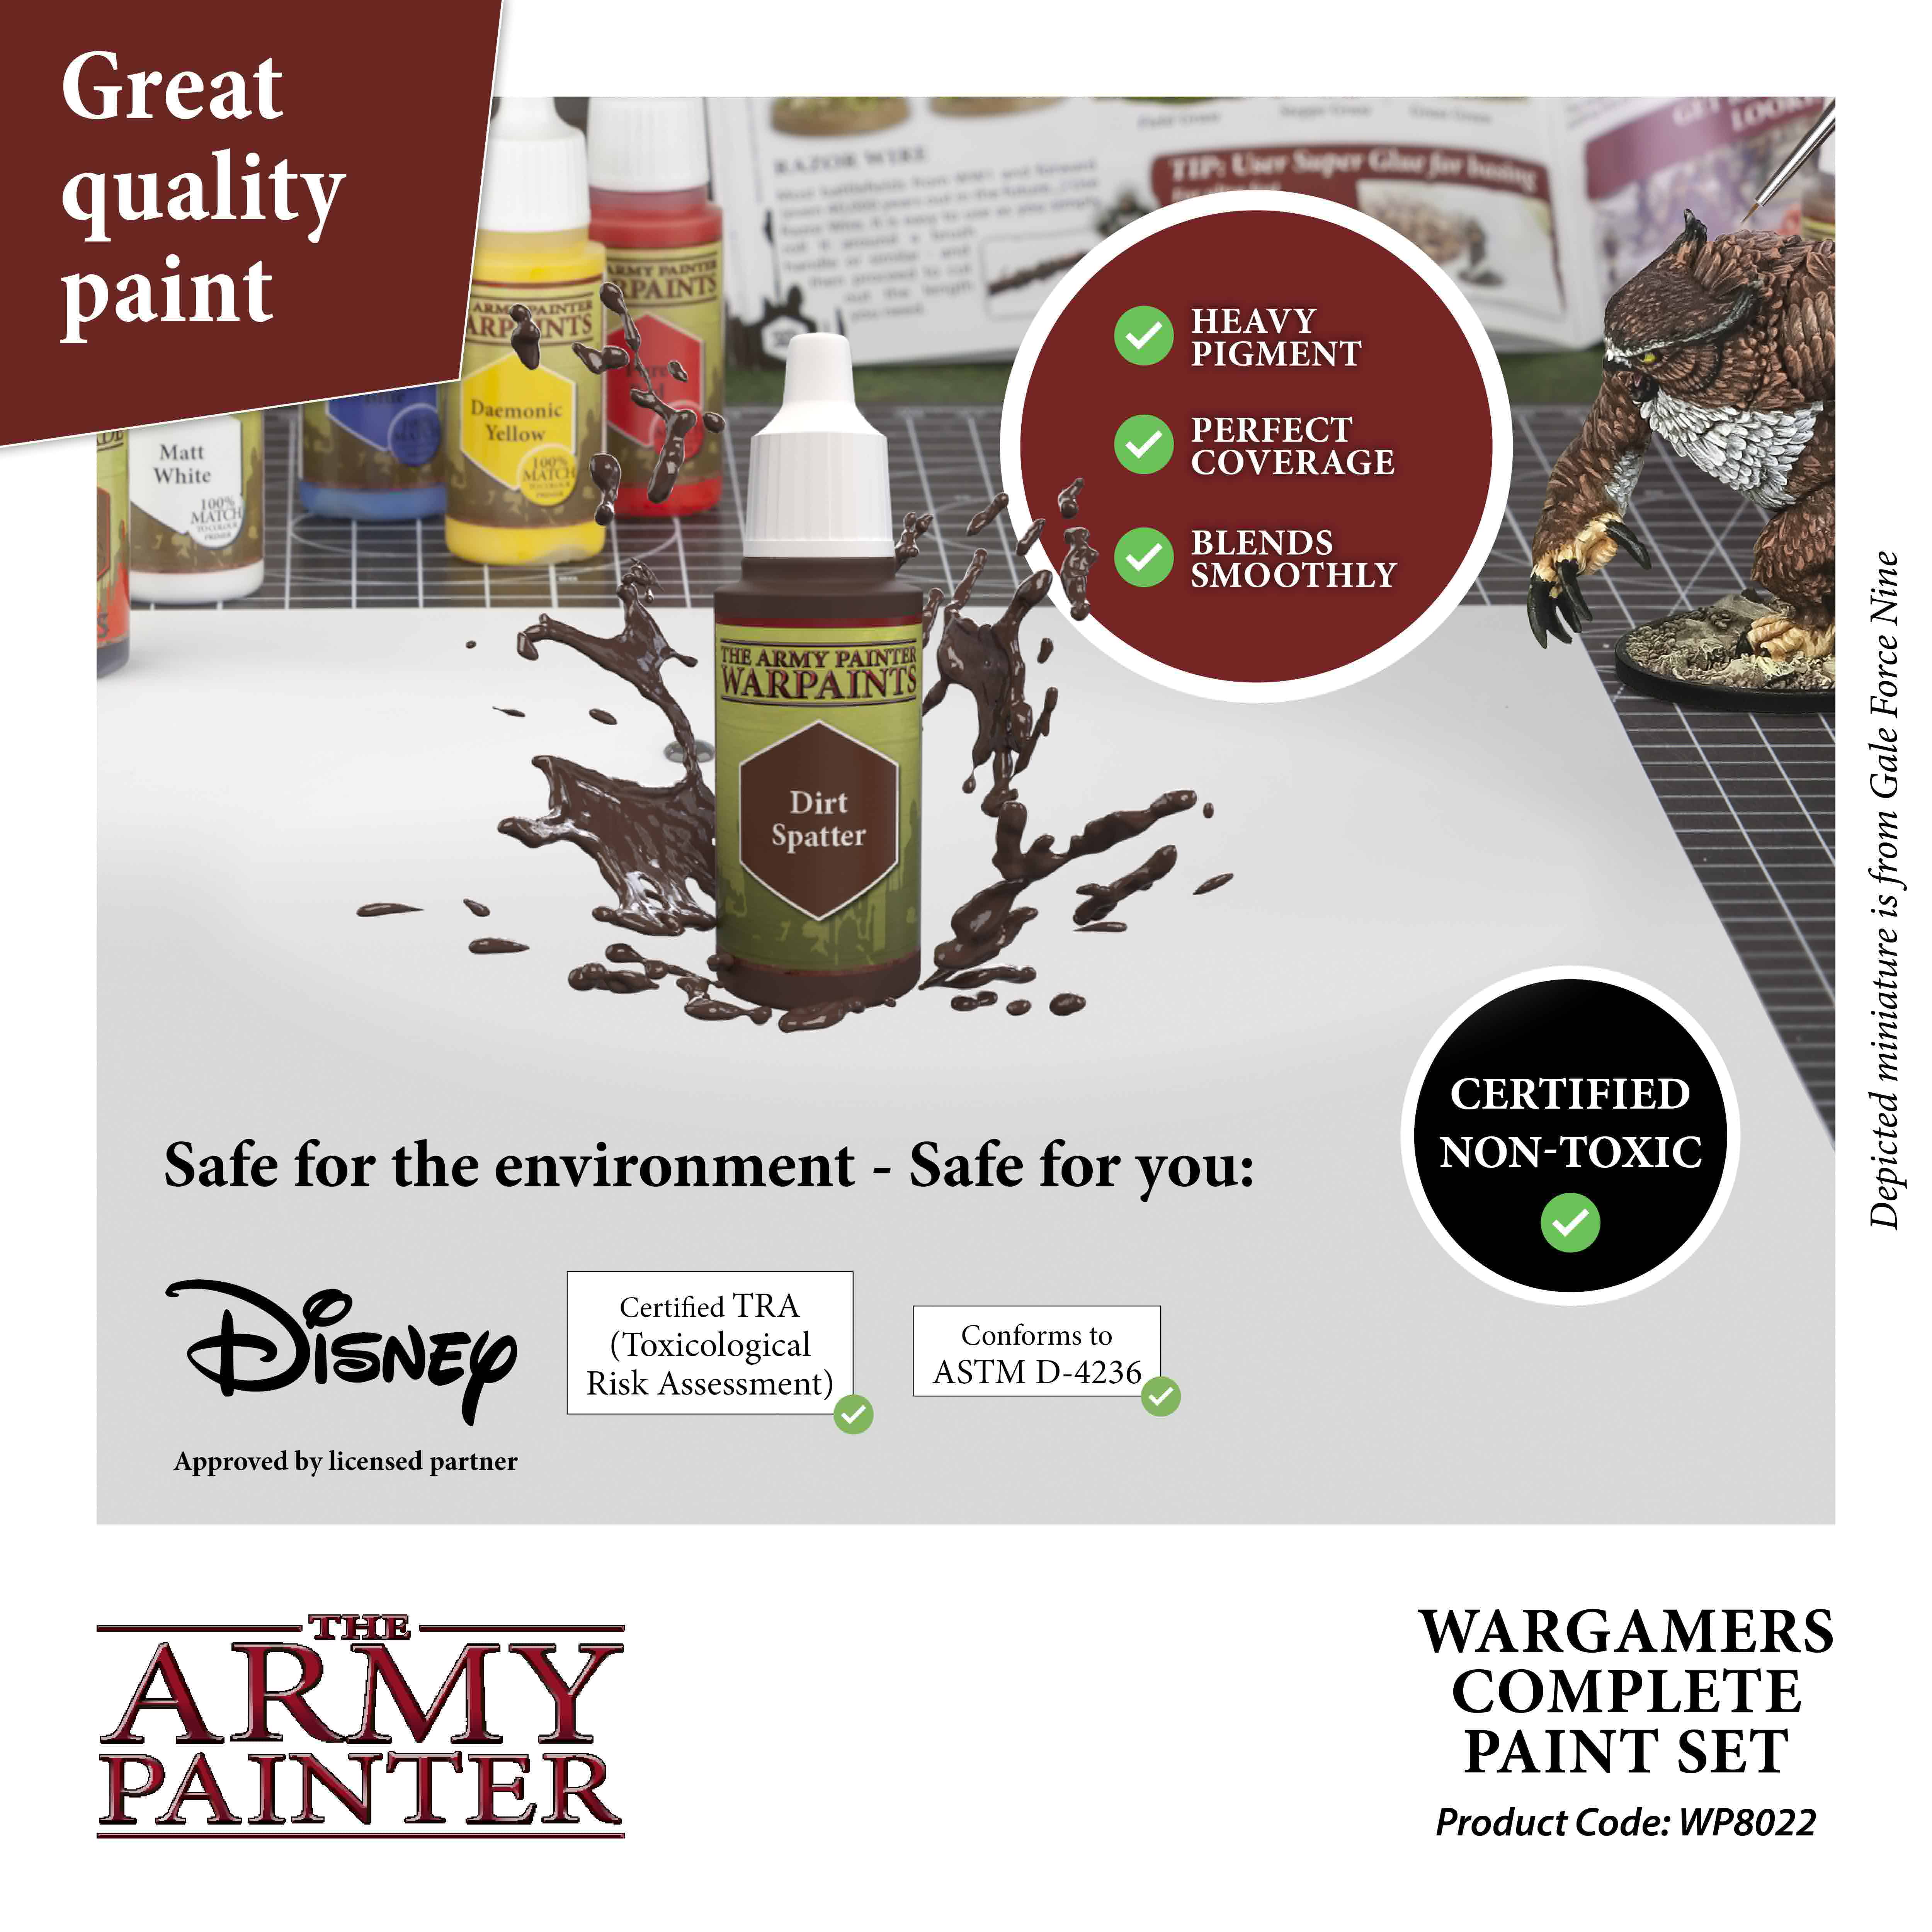 Army Painter Paint Sets